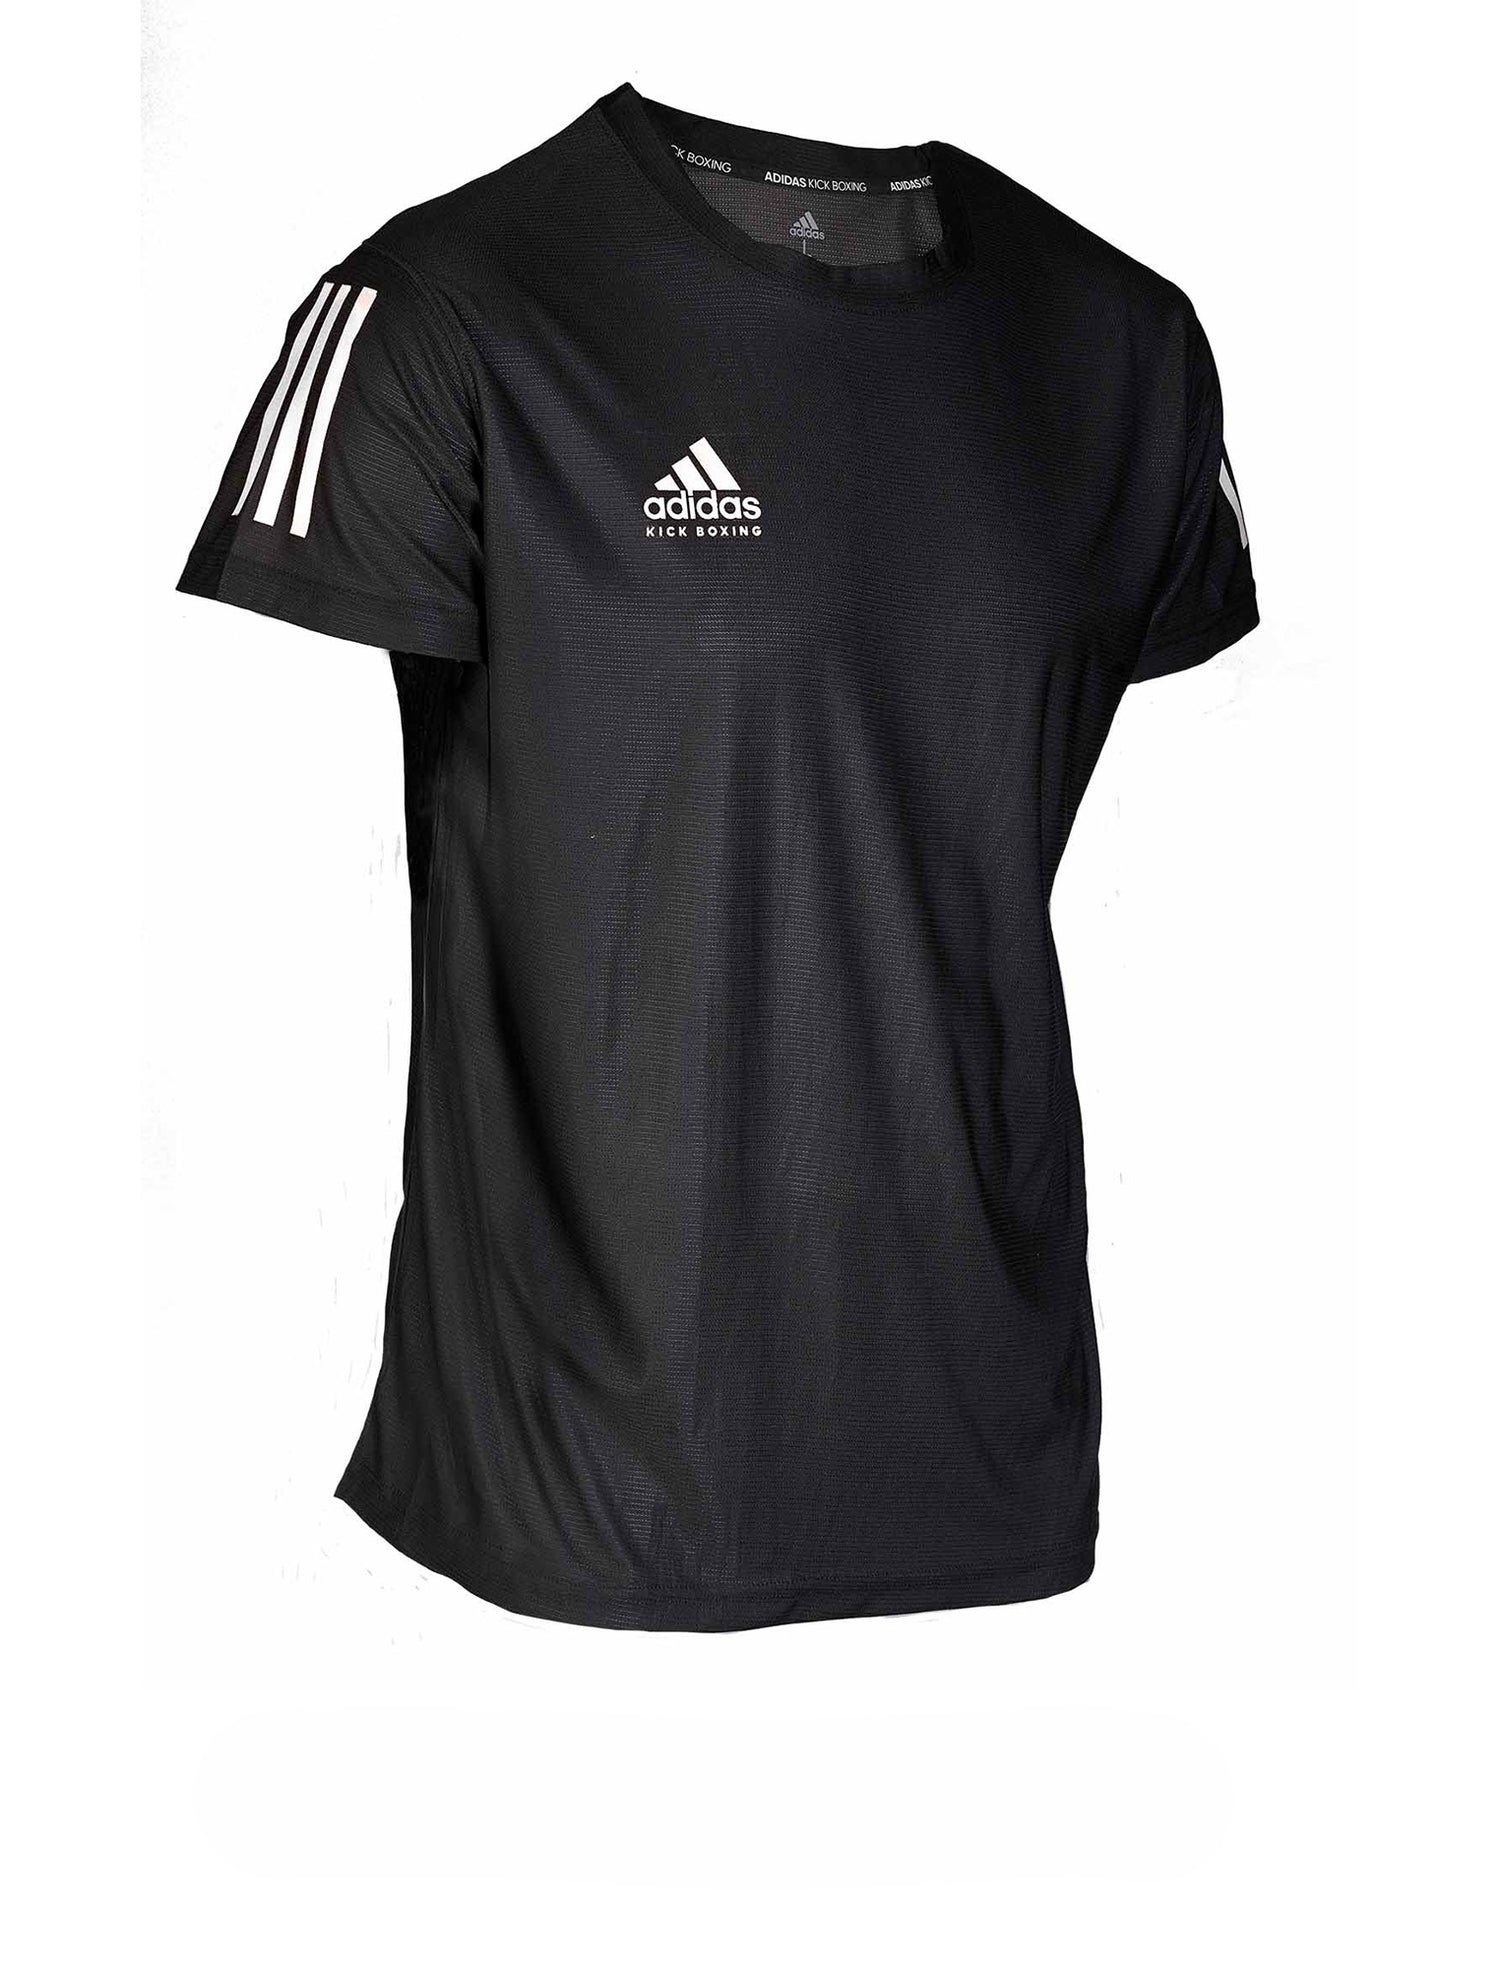 Adidas Unisex Basic Kickboxing T-Shirt adiKBTS100, Moisture-Wicking Polyester, Multiple colors, and sizes